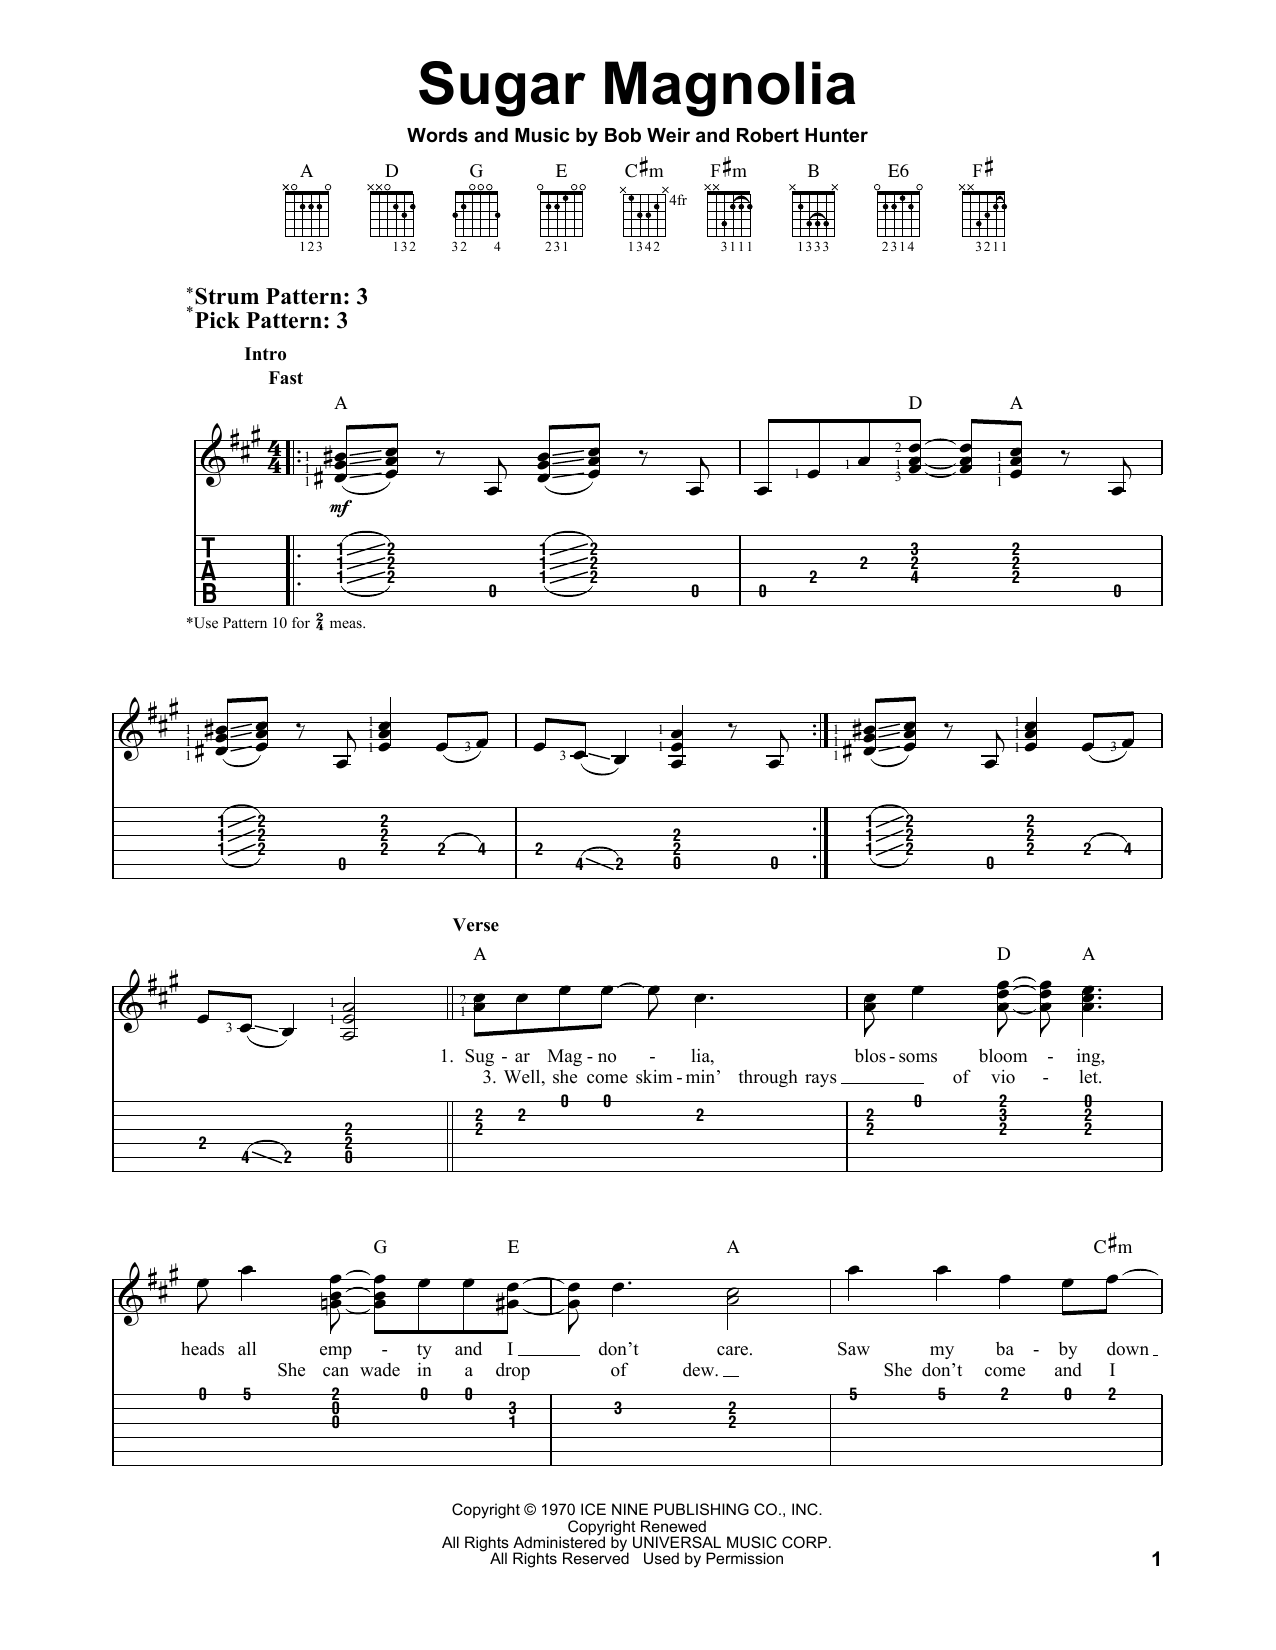 Grateful Dead Sugar Magnolia Sheet Music Notes & Chords for Easy Guitar Tab - Download or Print PDF